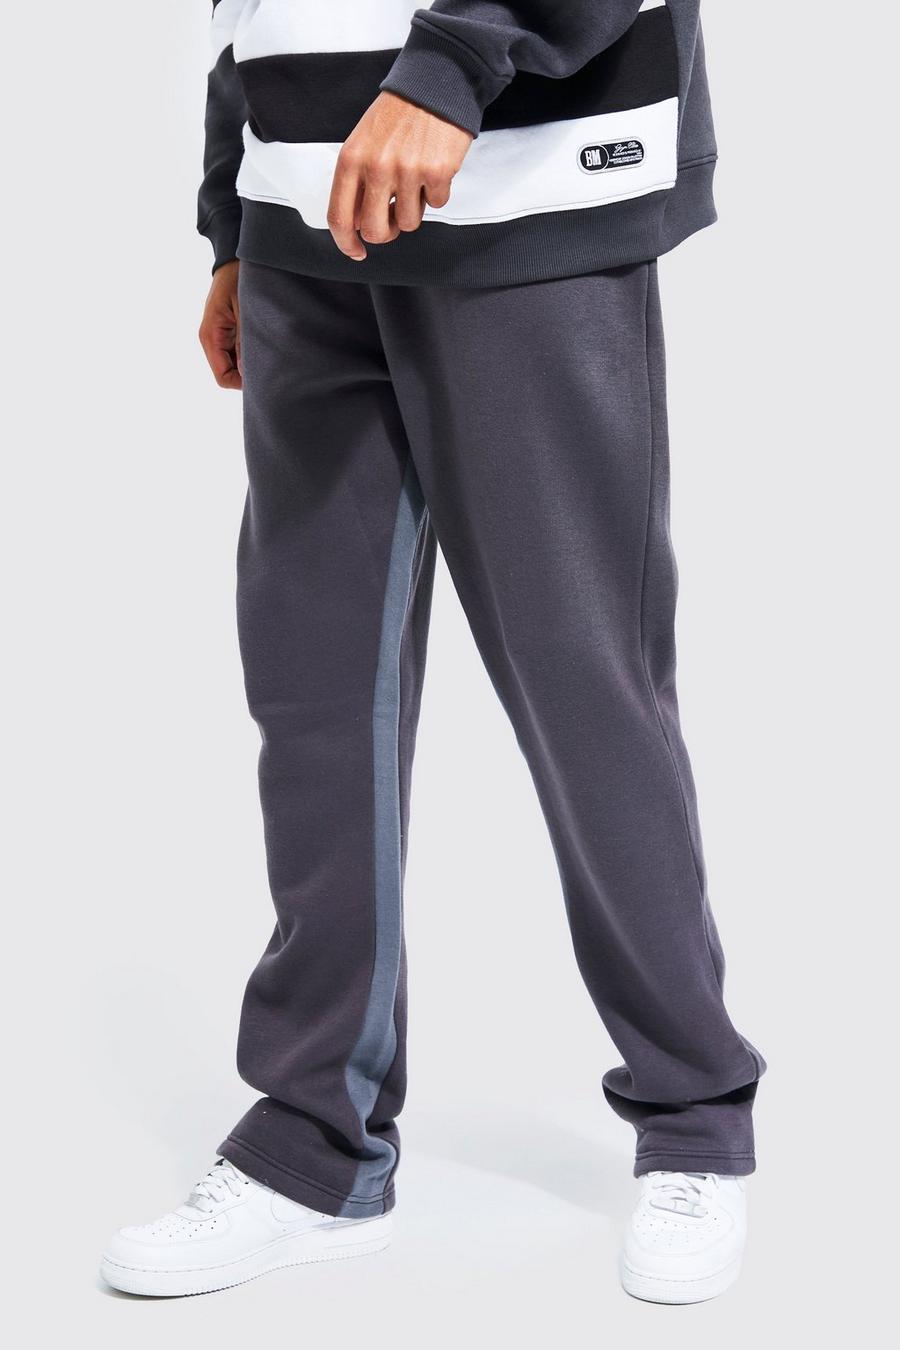 Pantalón deportivo Tall Regular con panel y refuerzo, Charcoal gris